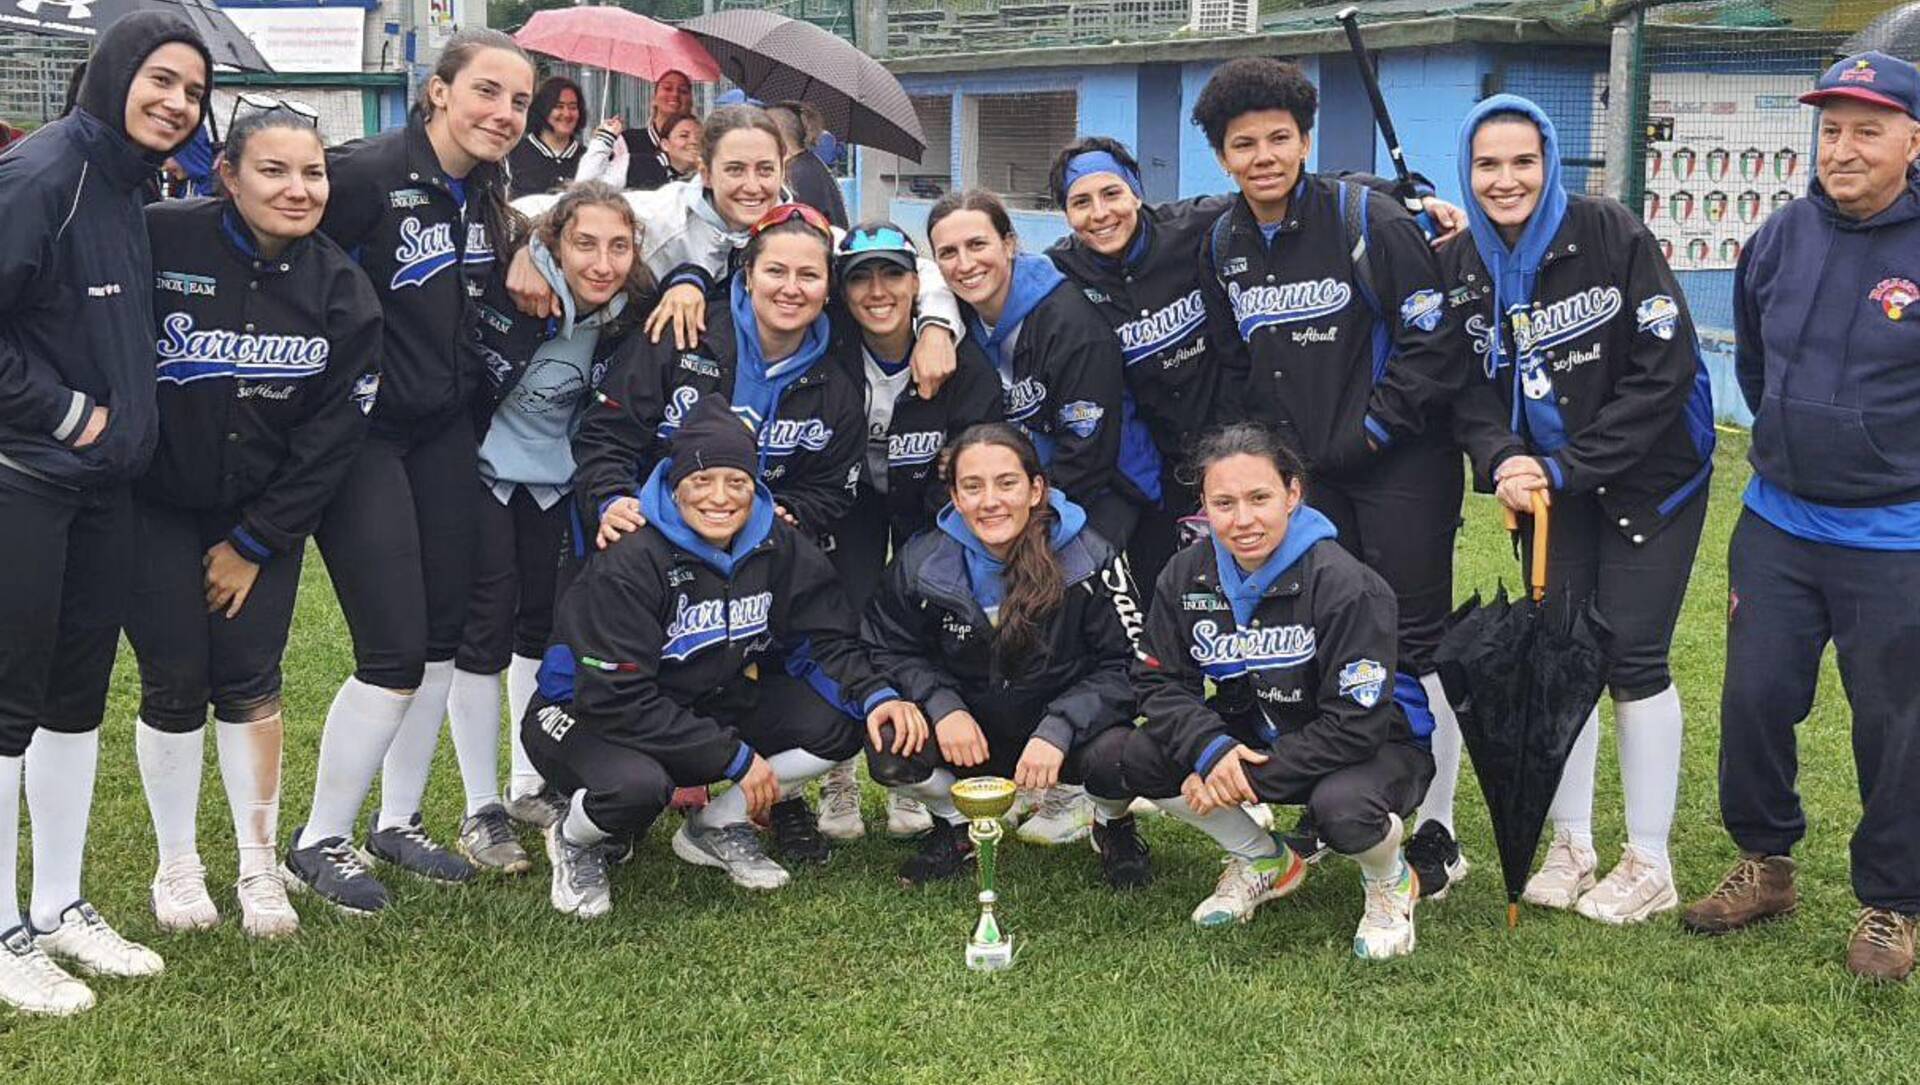 Softball, Coppa Prealpi: Caronno seconda ed Inox Team Saronno al quarto posto